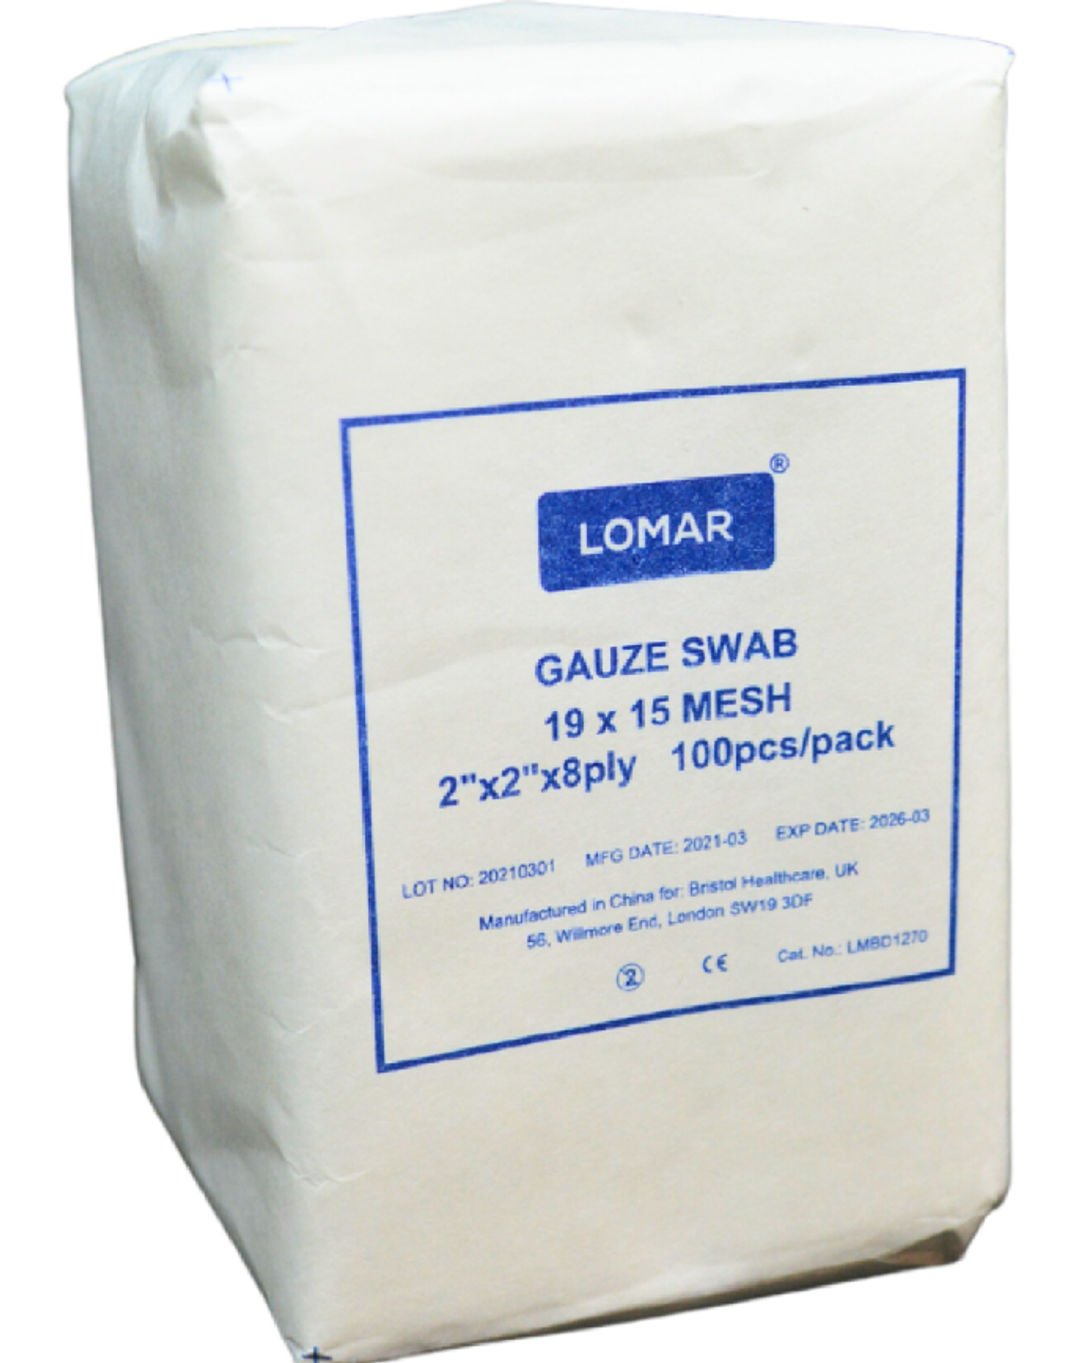 5 x  Lomar Gauze Swab, 5 cm x 5 cm x 8Ply - Pack of 100 (LMBD 1270)